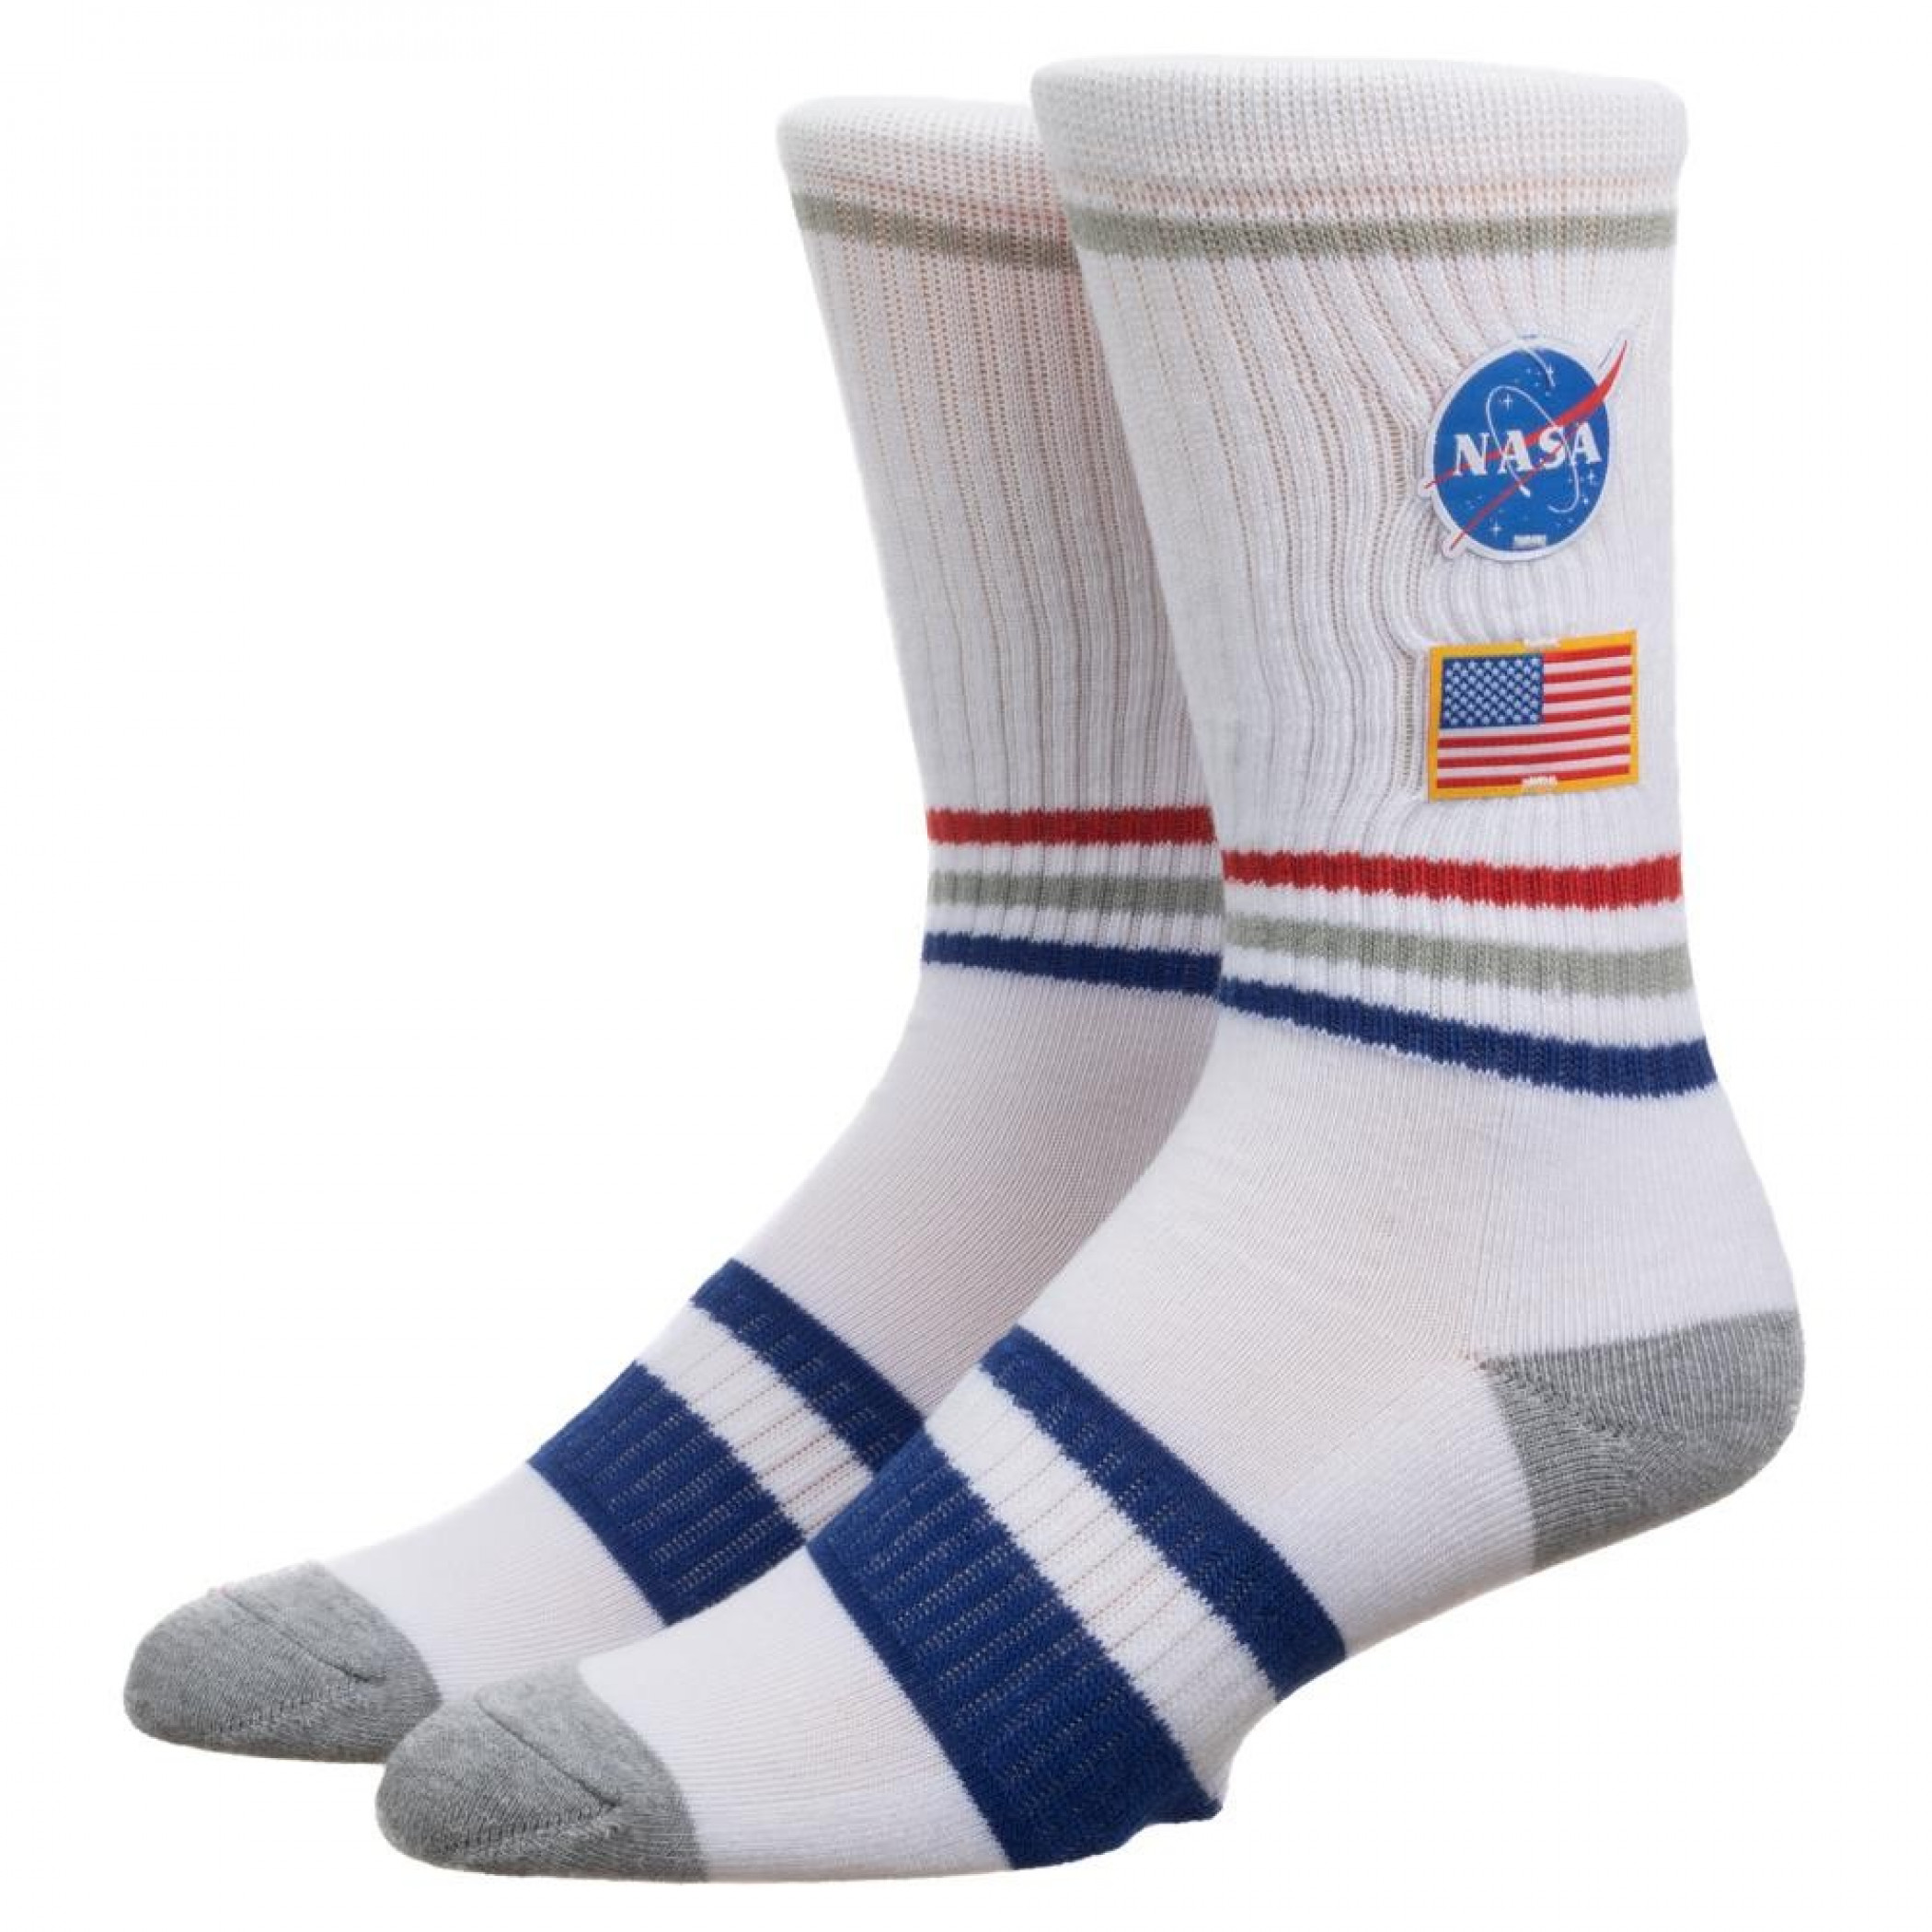 NASA Patch Crew Socks